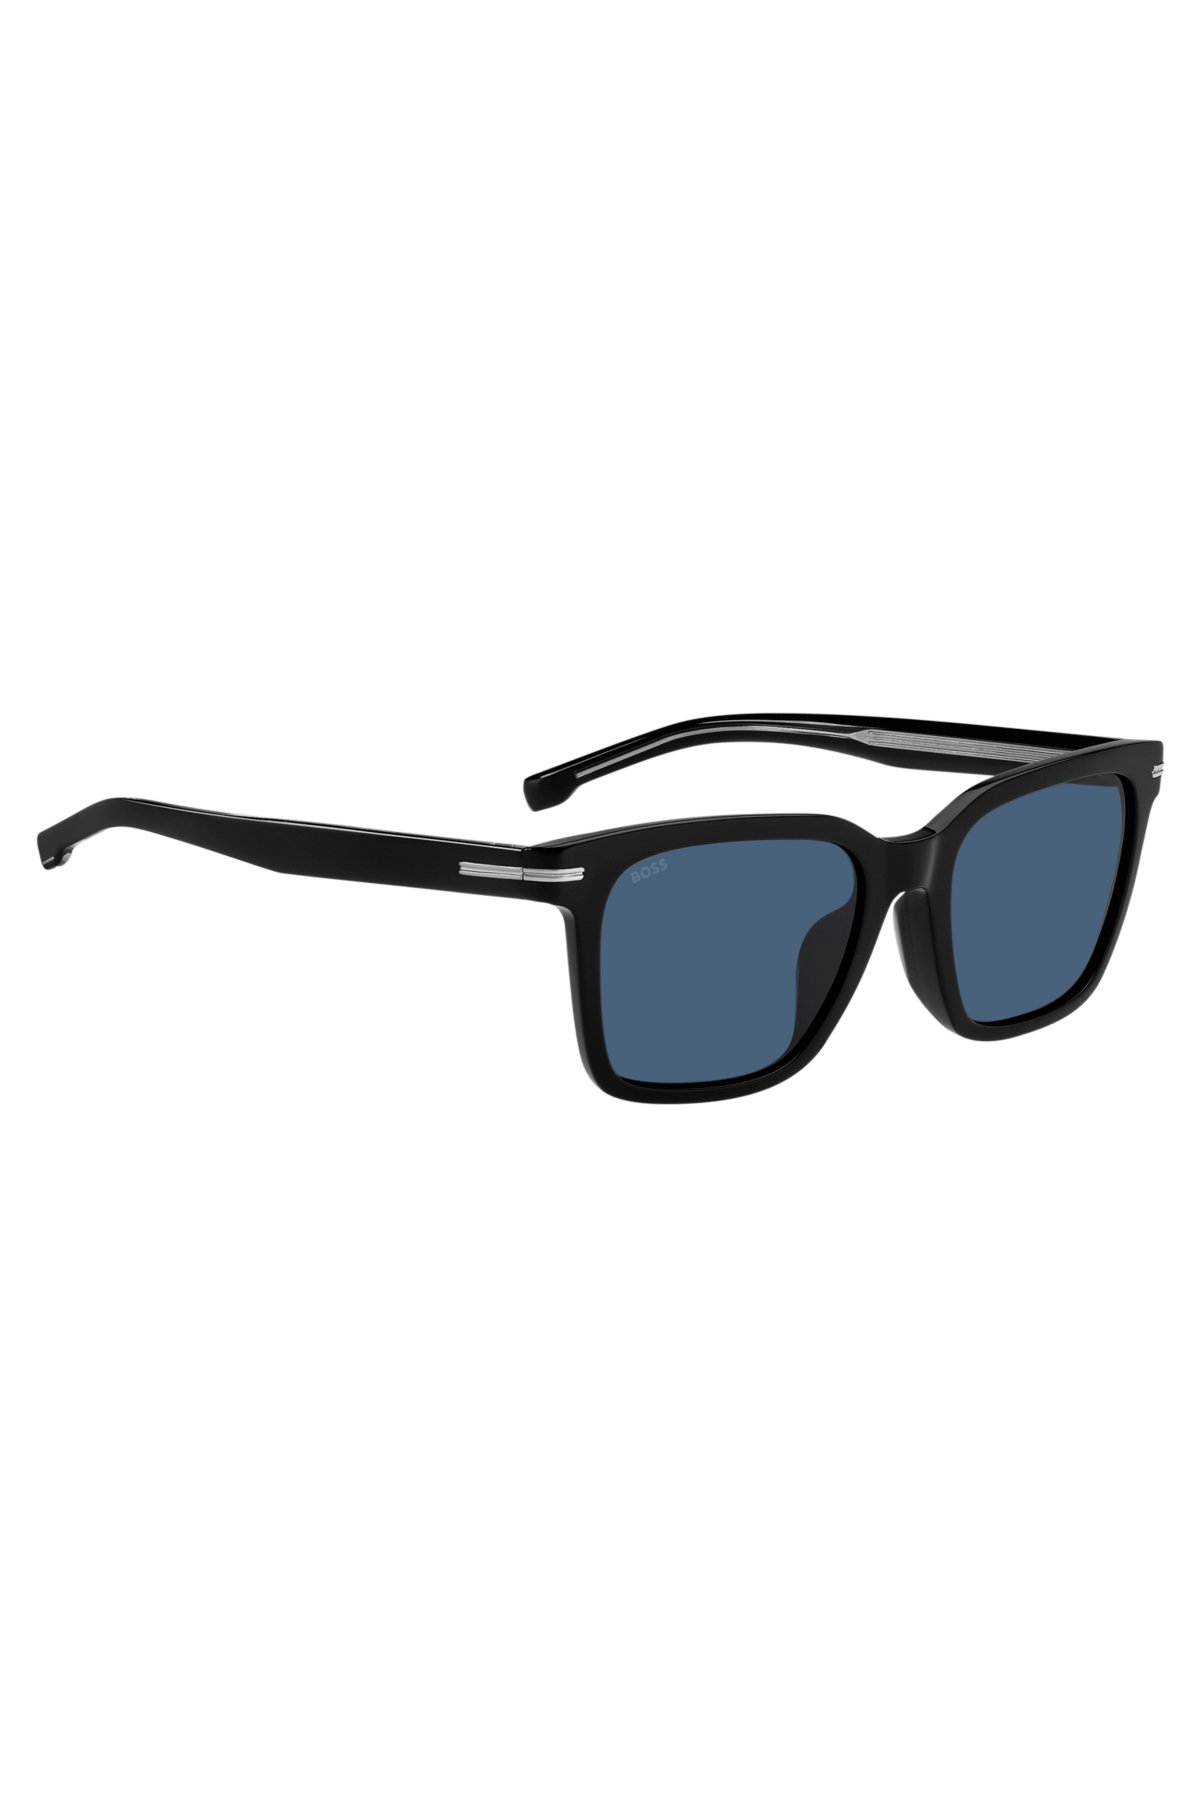 BOSS Black-acetate sunglasses signature detail